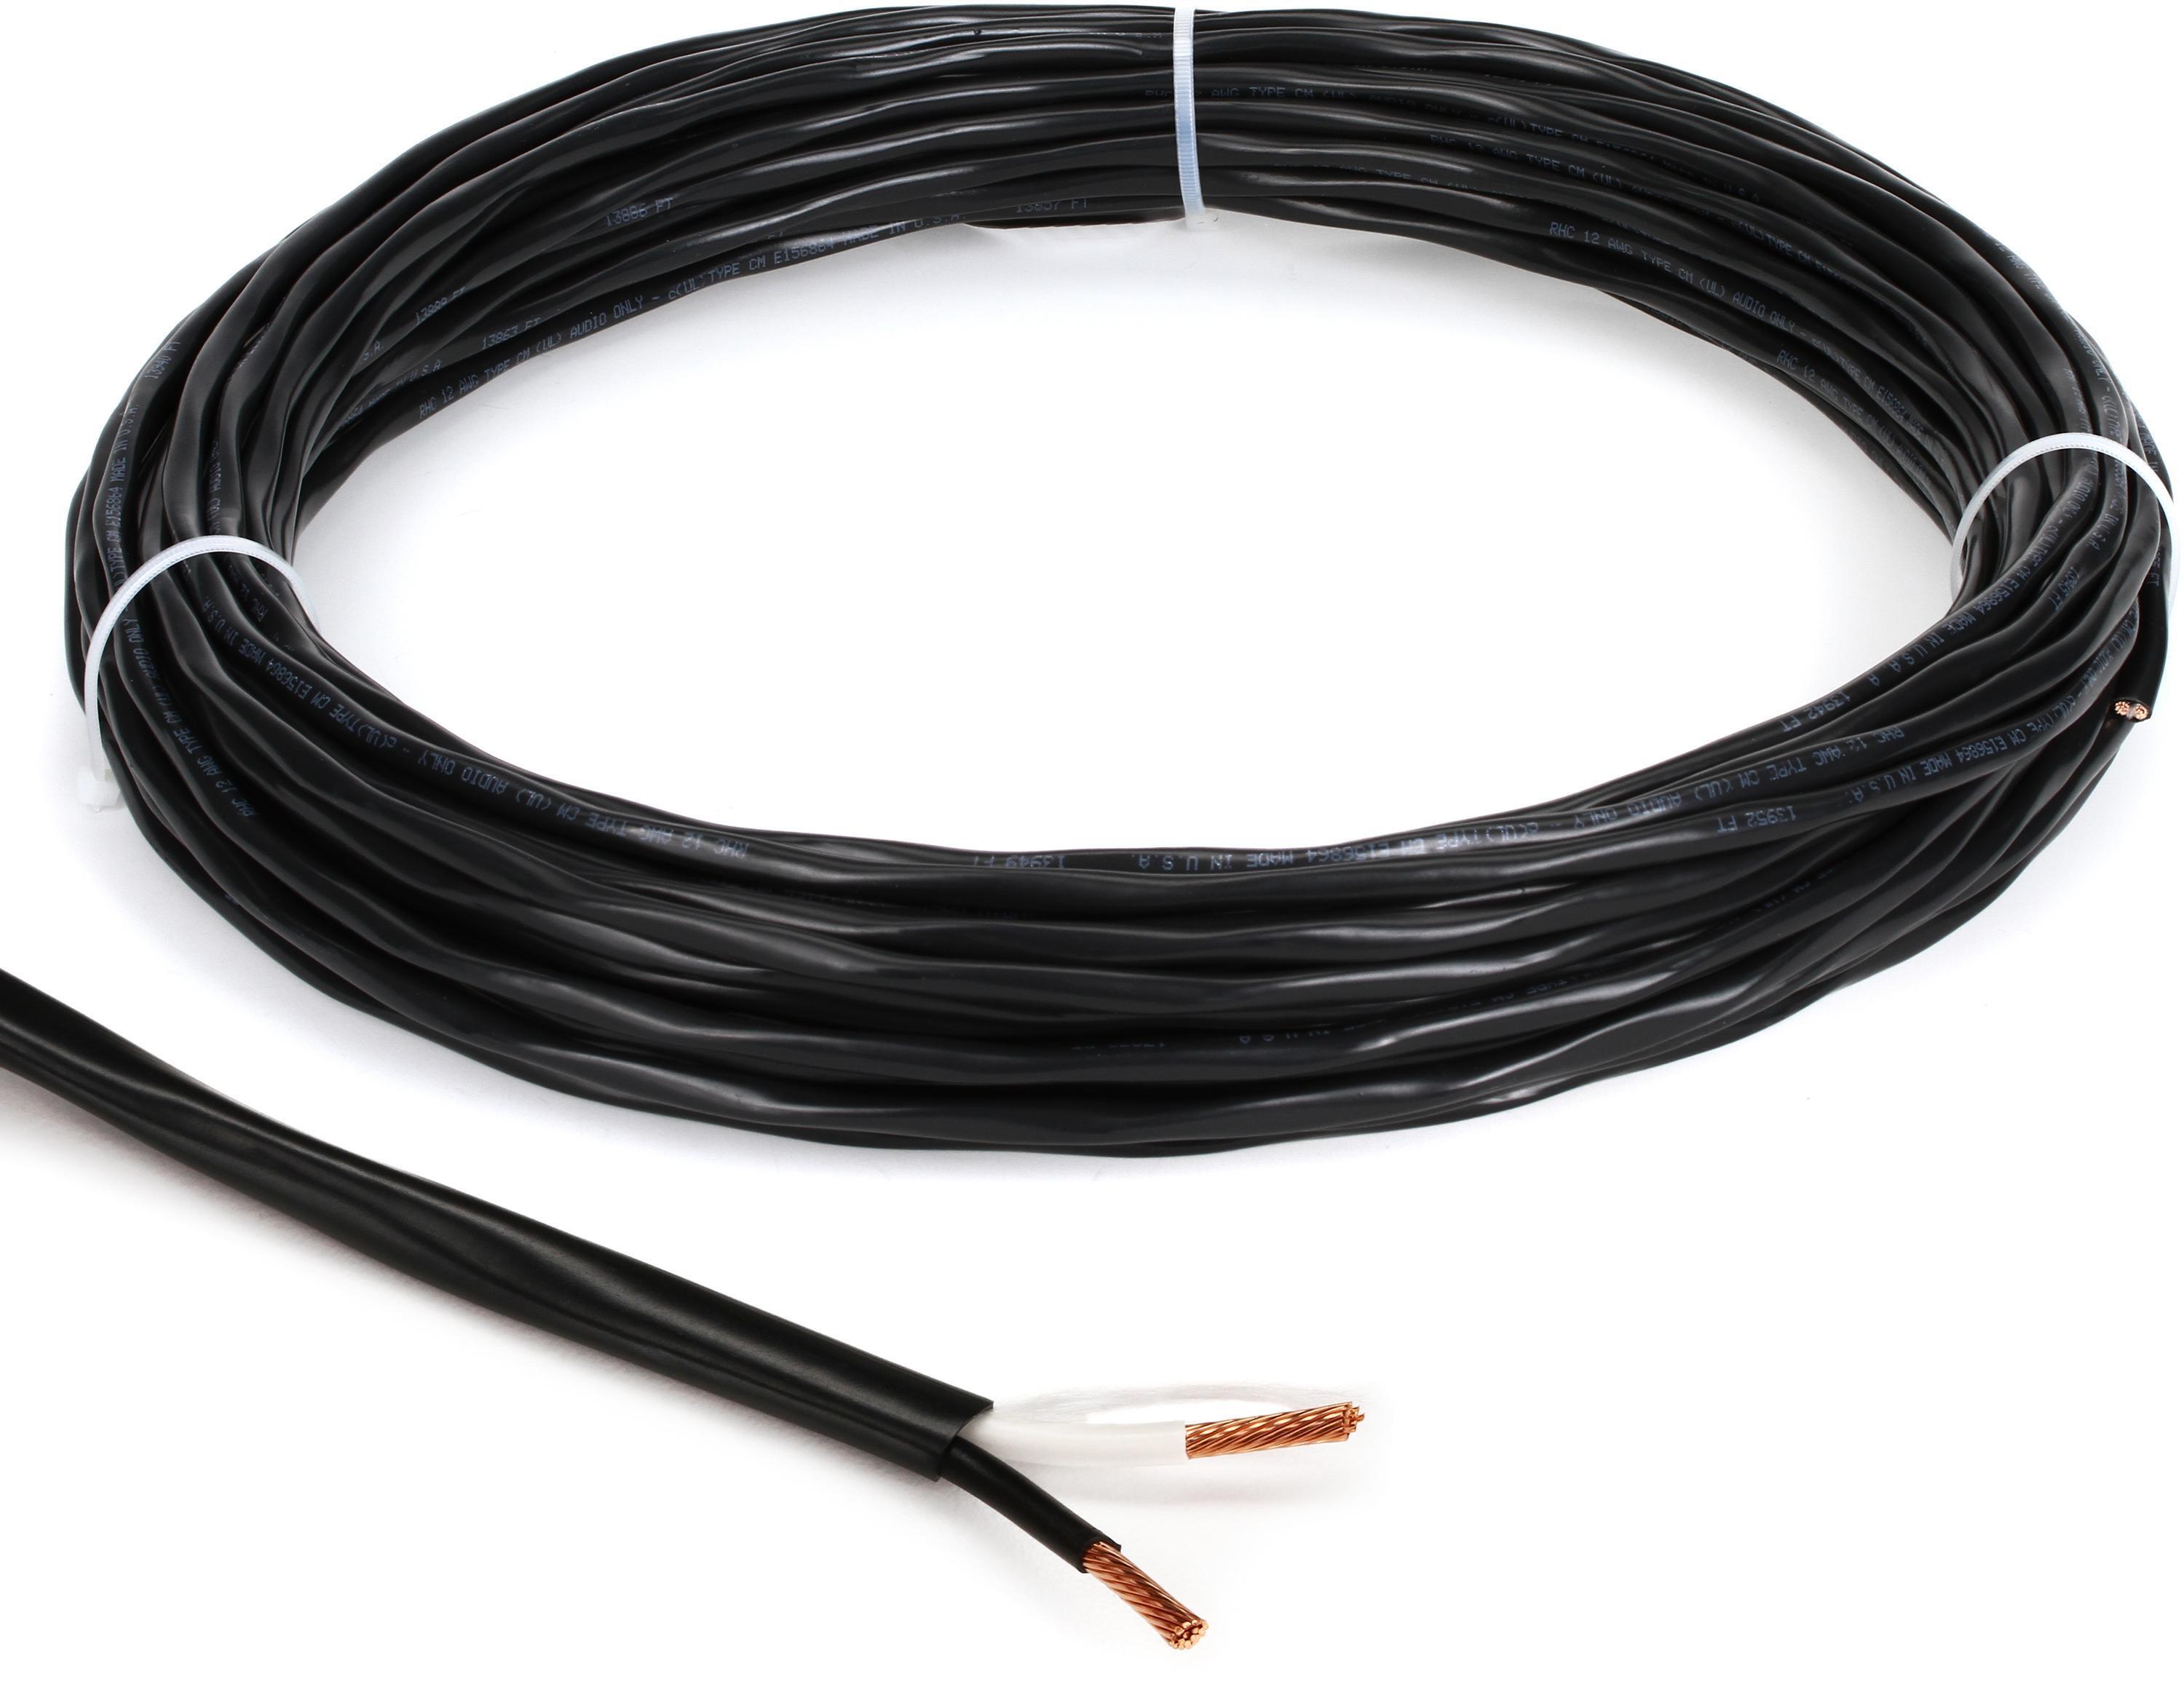 Rapco 22GA 2 Conductor CL3 Install Cable 500-Feet